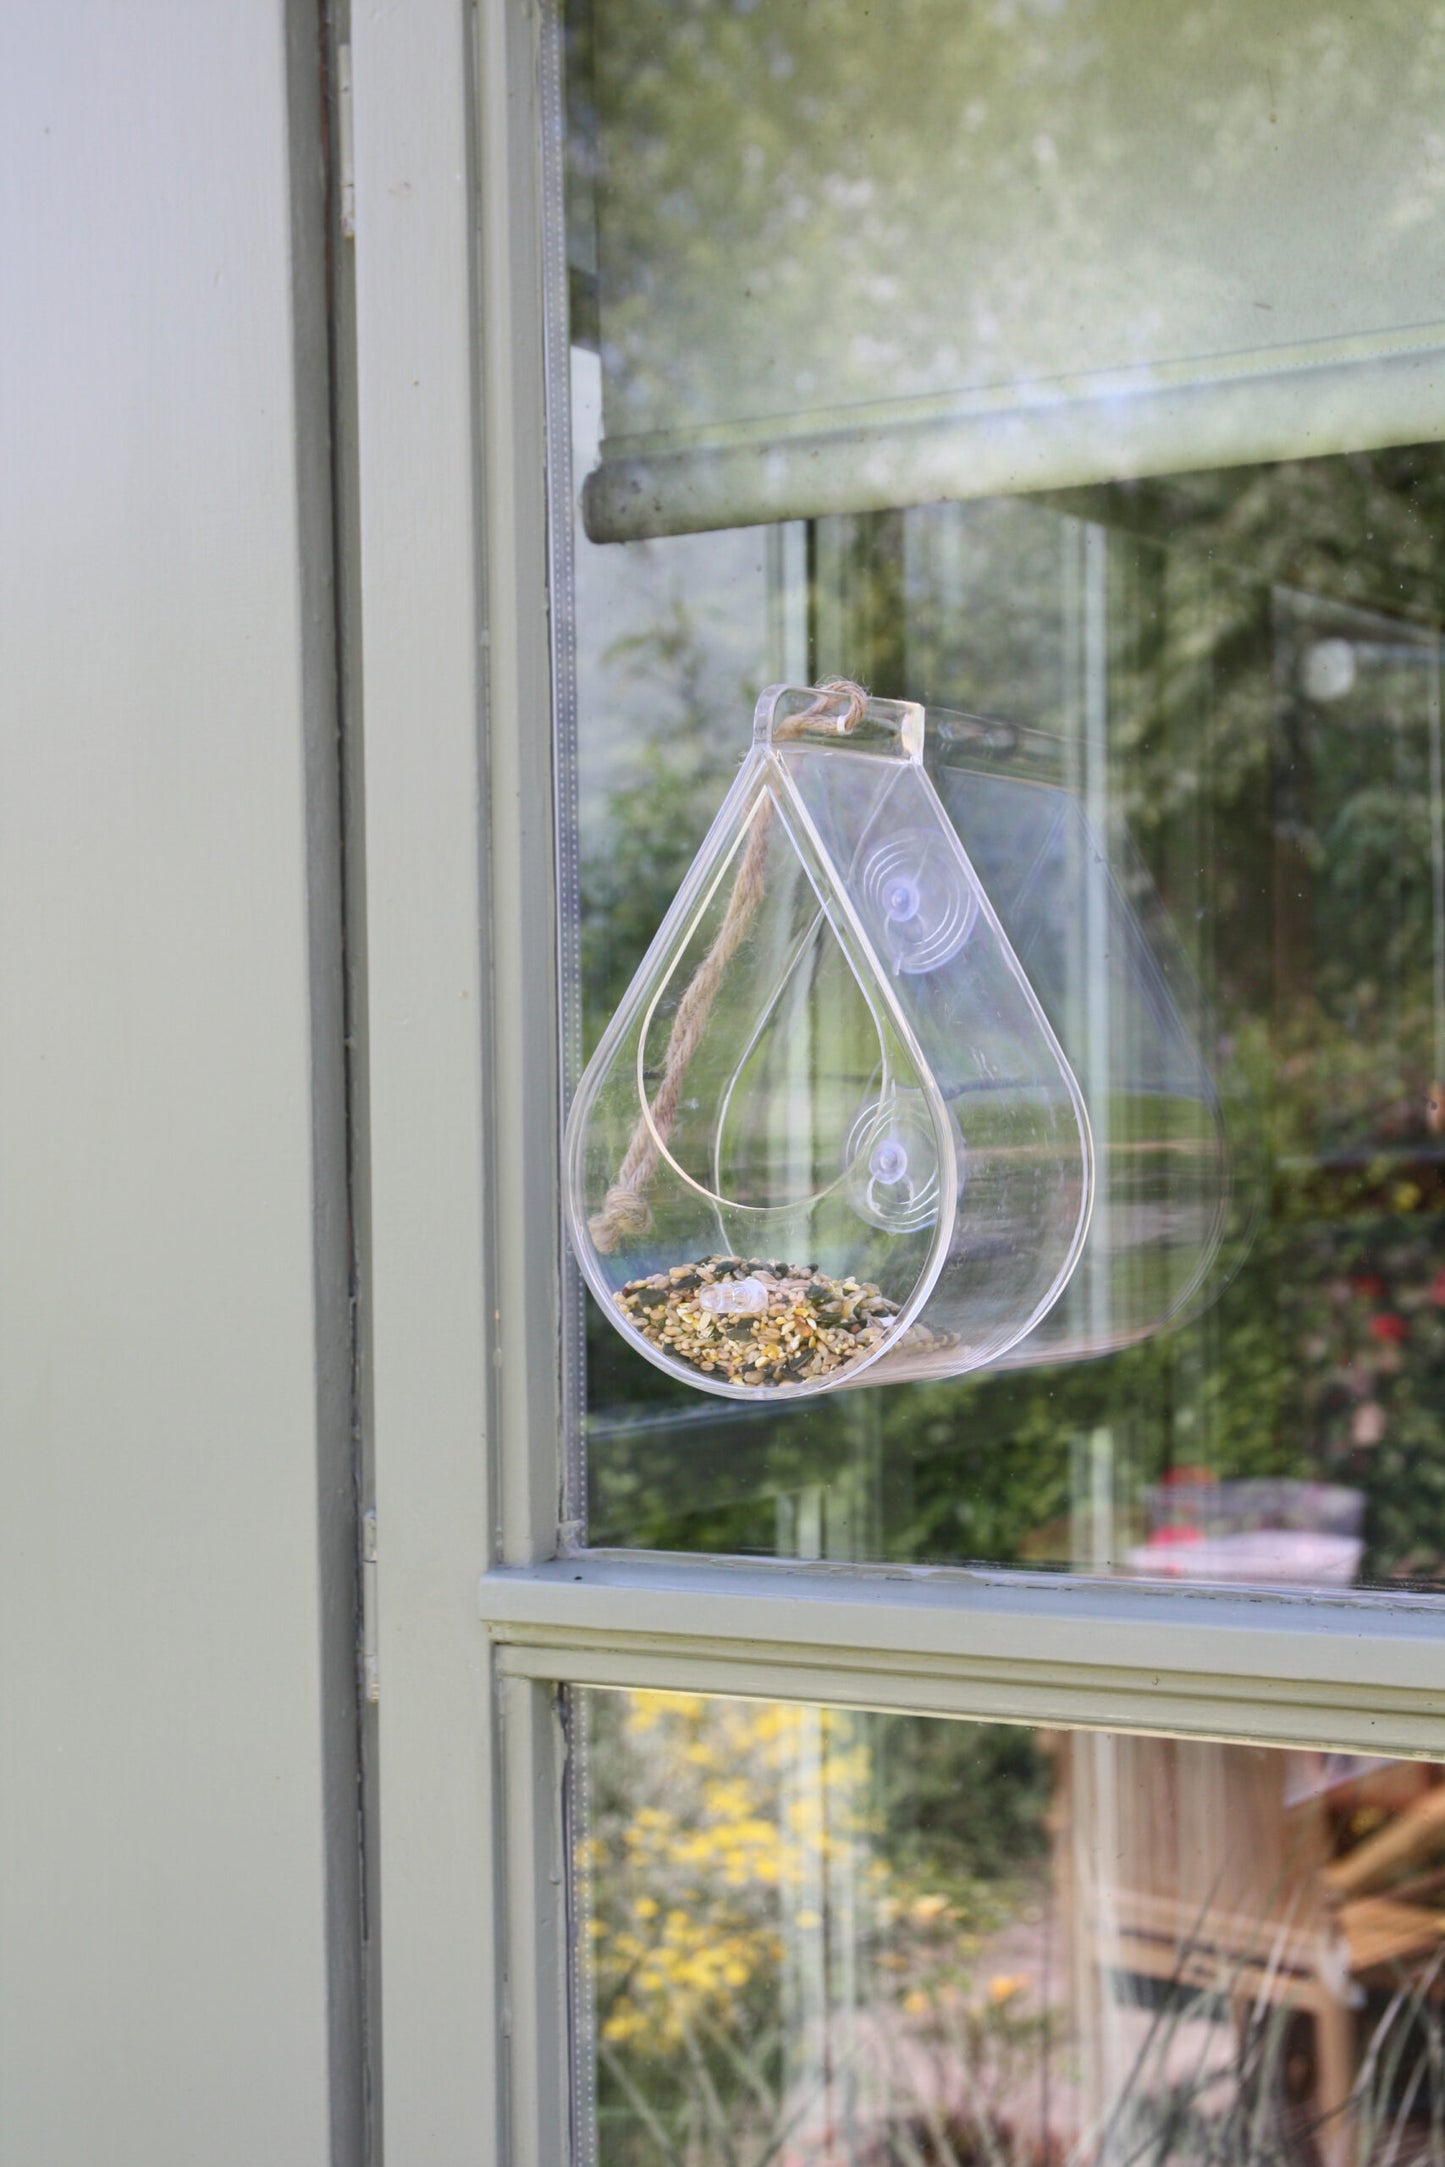 dewdrop window feeder